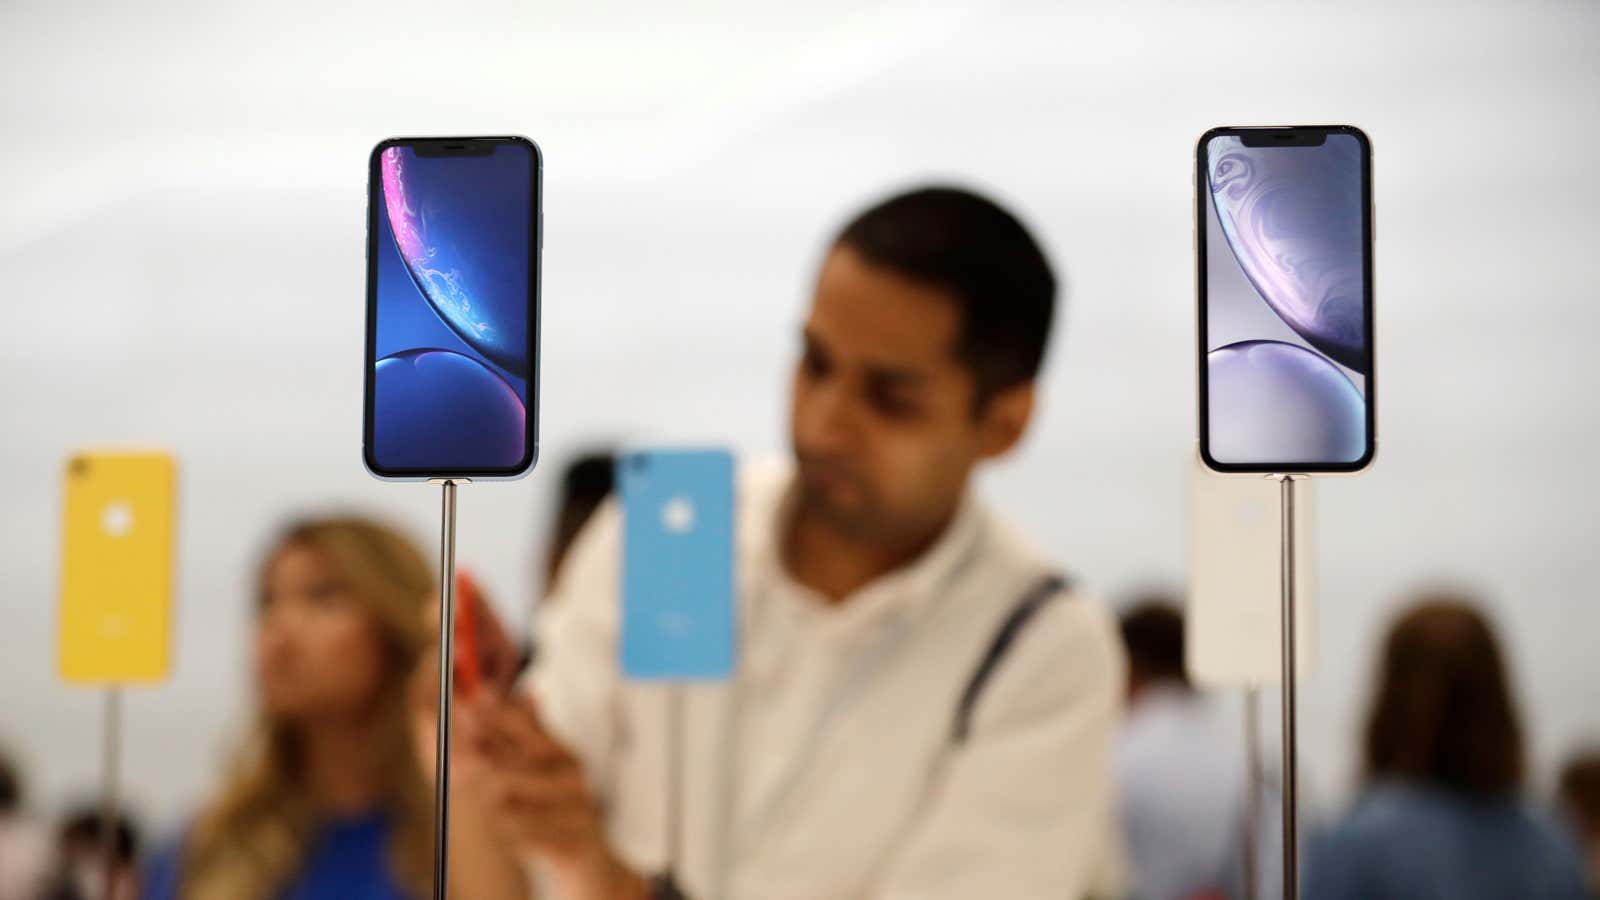 Apple’s newest phones on display in California.